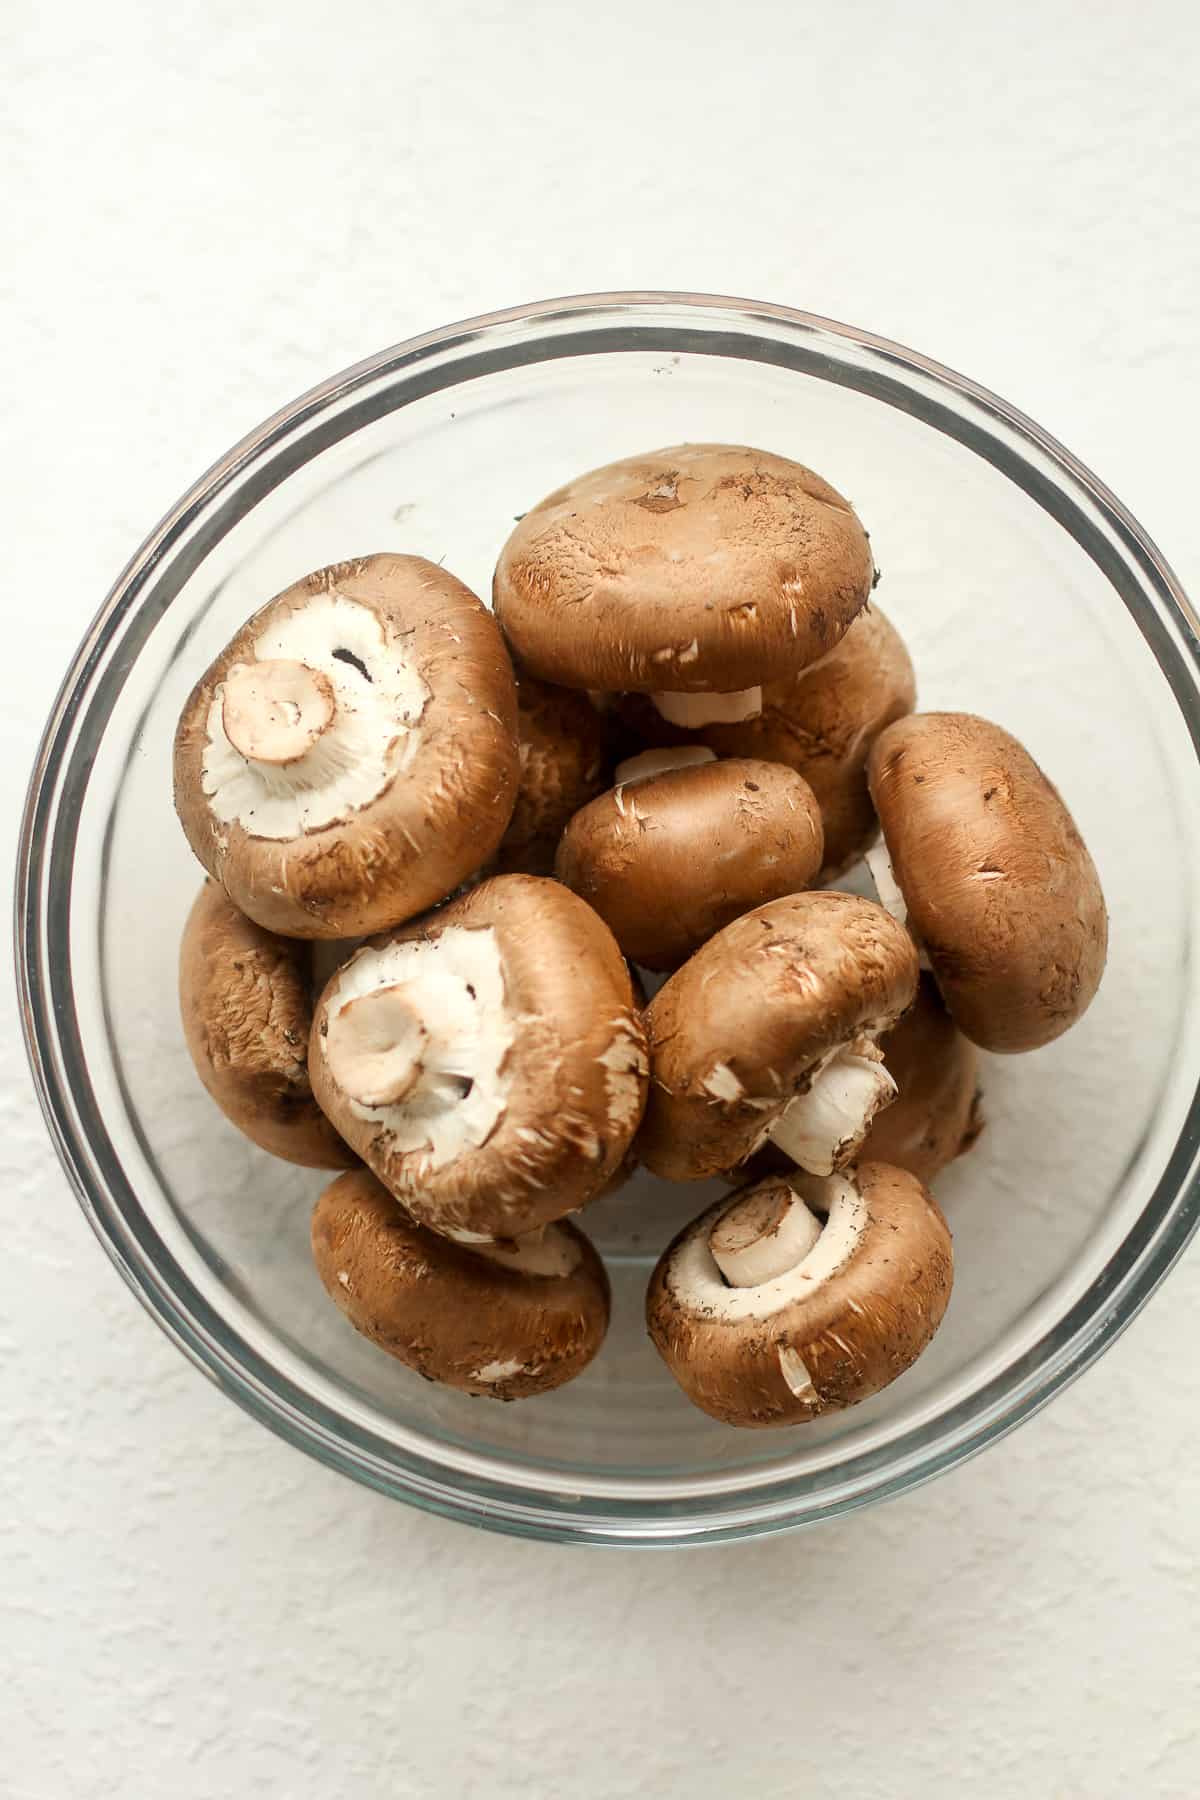 A bowl of large Bella mushrooms.